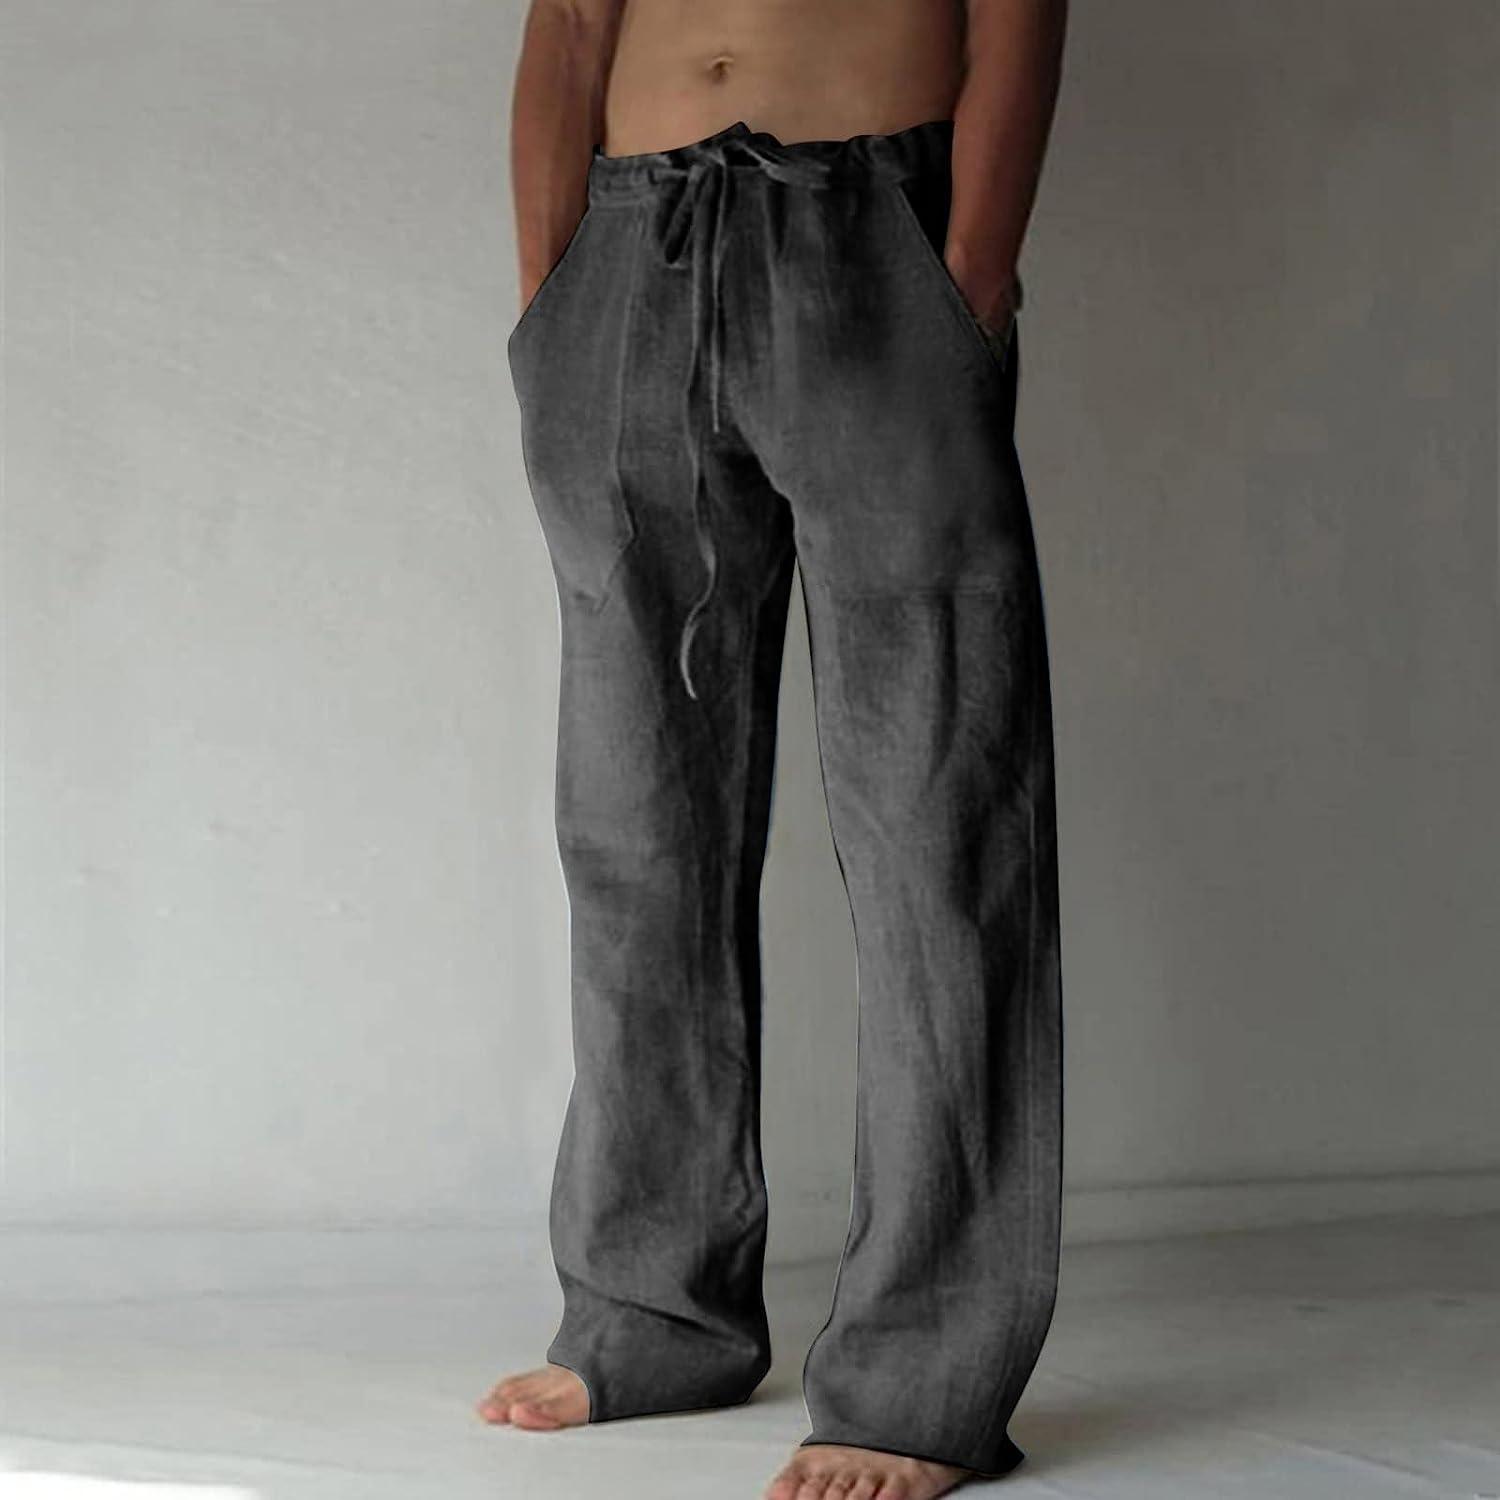 Dgoopd Men's Cotton Linen Pants Casual Elastic Waist Drawstring